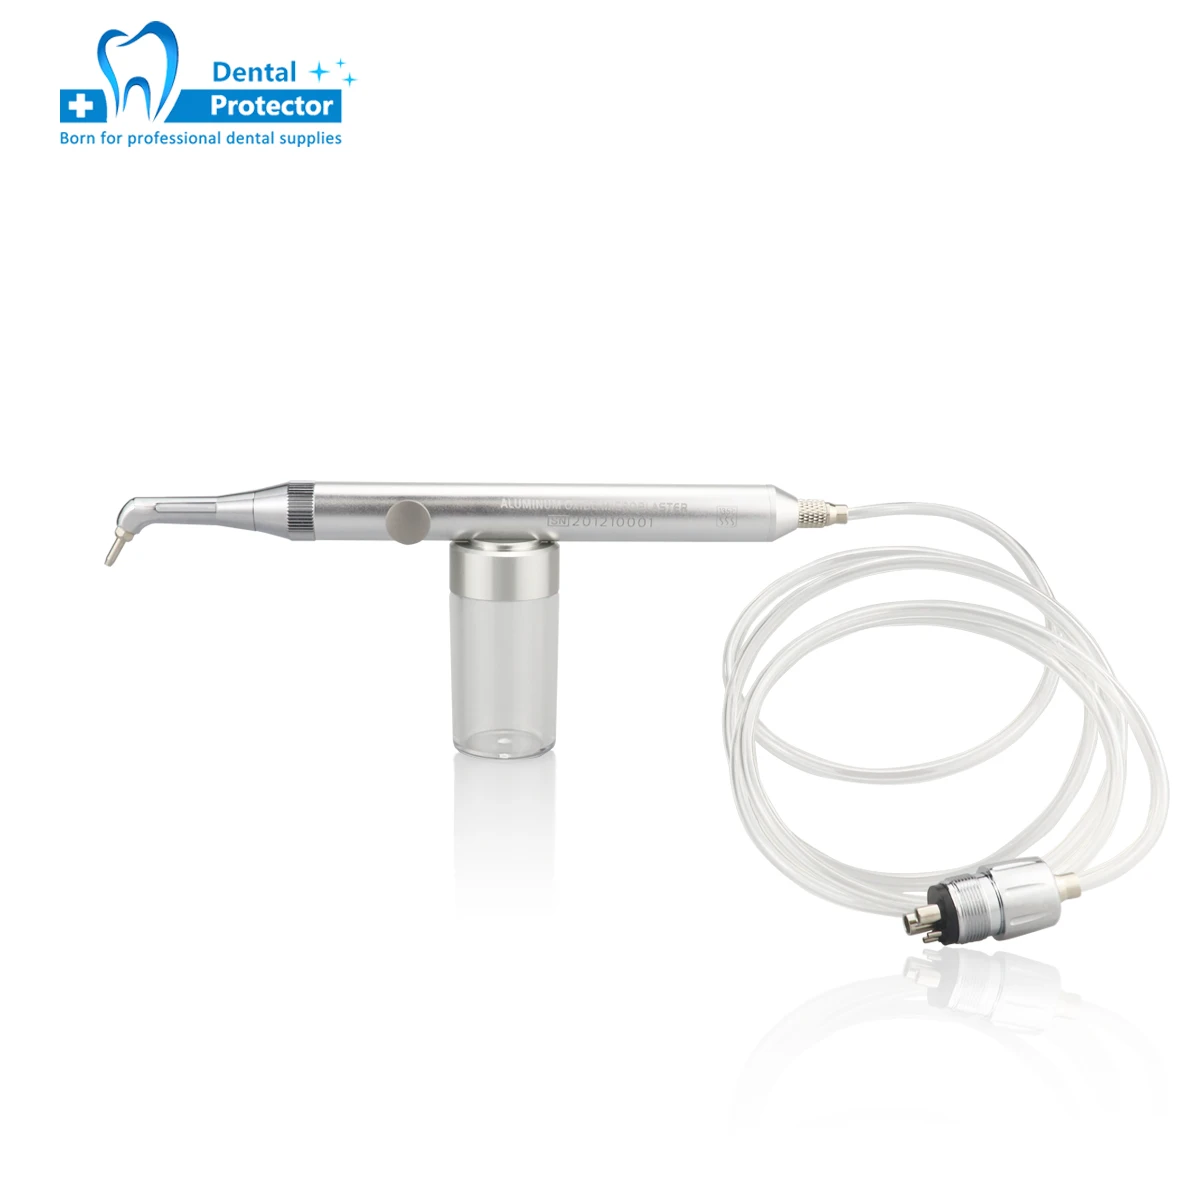 Dental Aluminum Oxide Air Abrasion Polisher /Dental Alumina Microblaster Dental Sandblasting Equipment with Tube